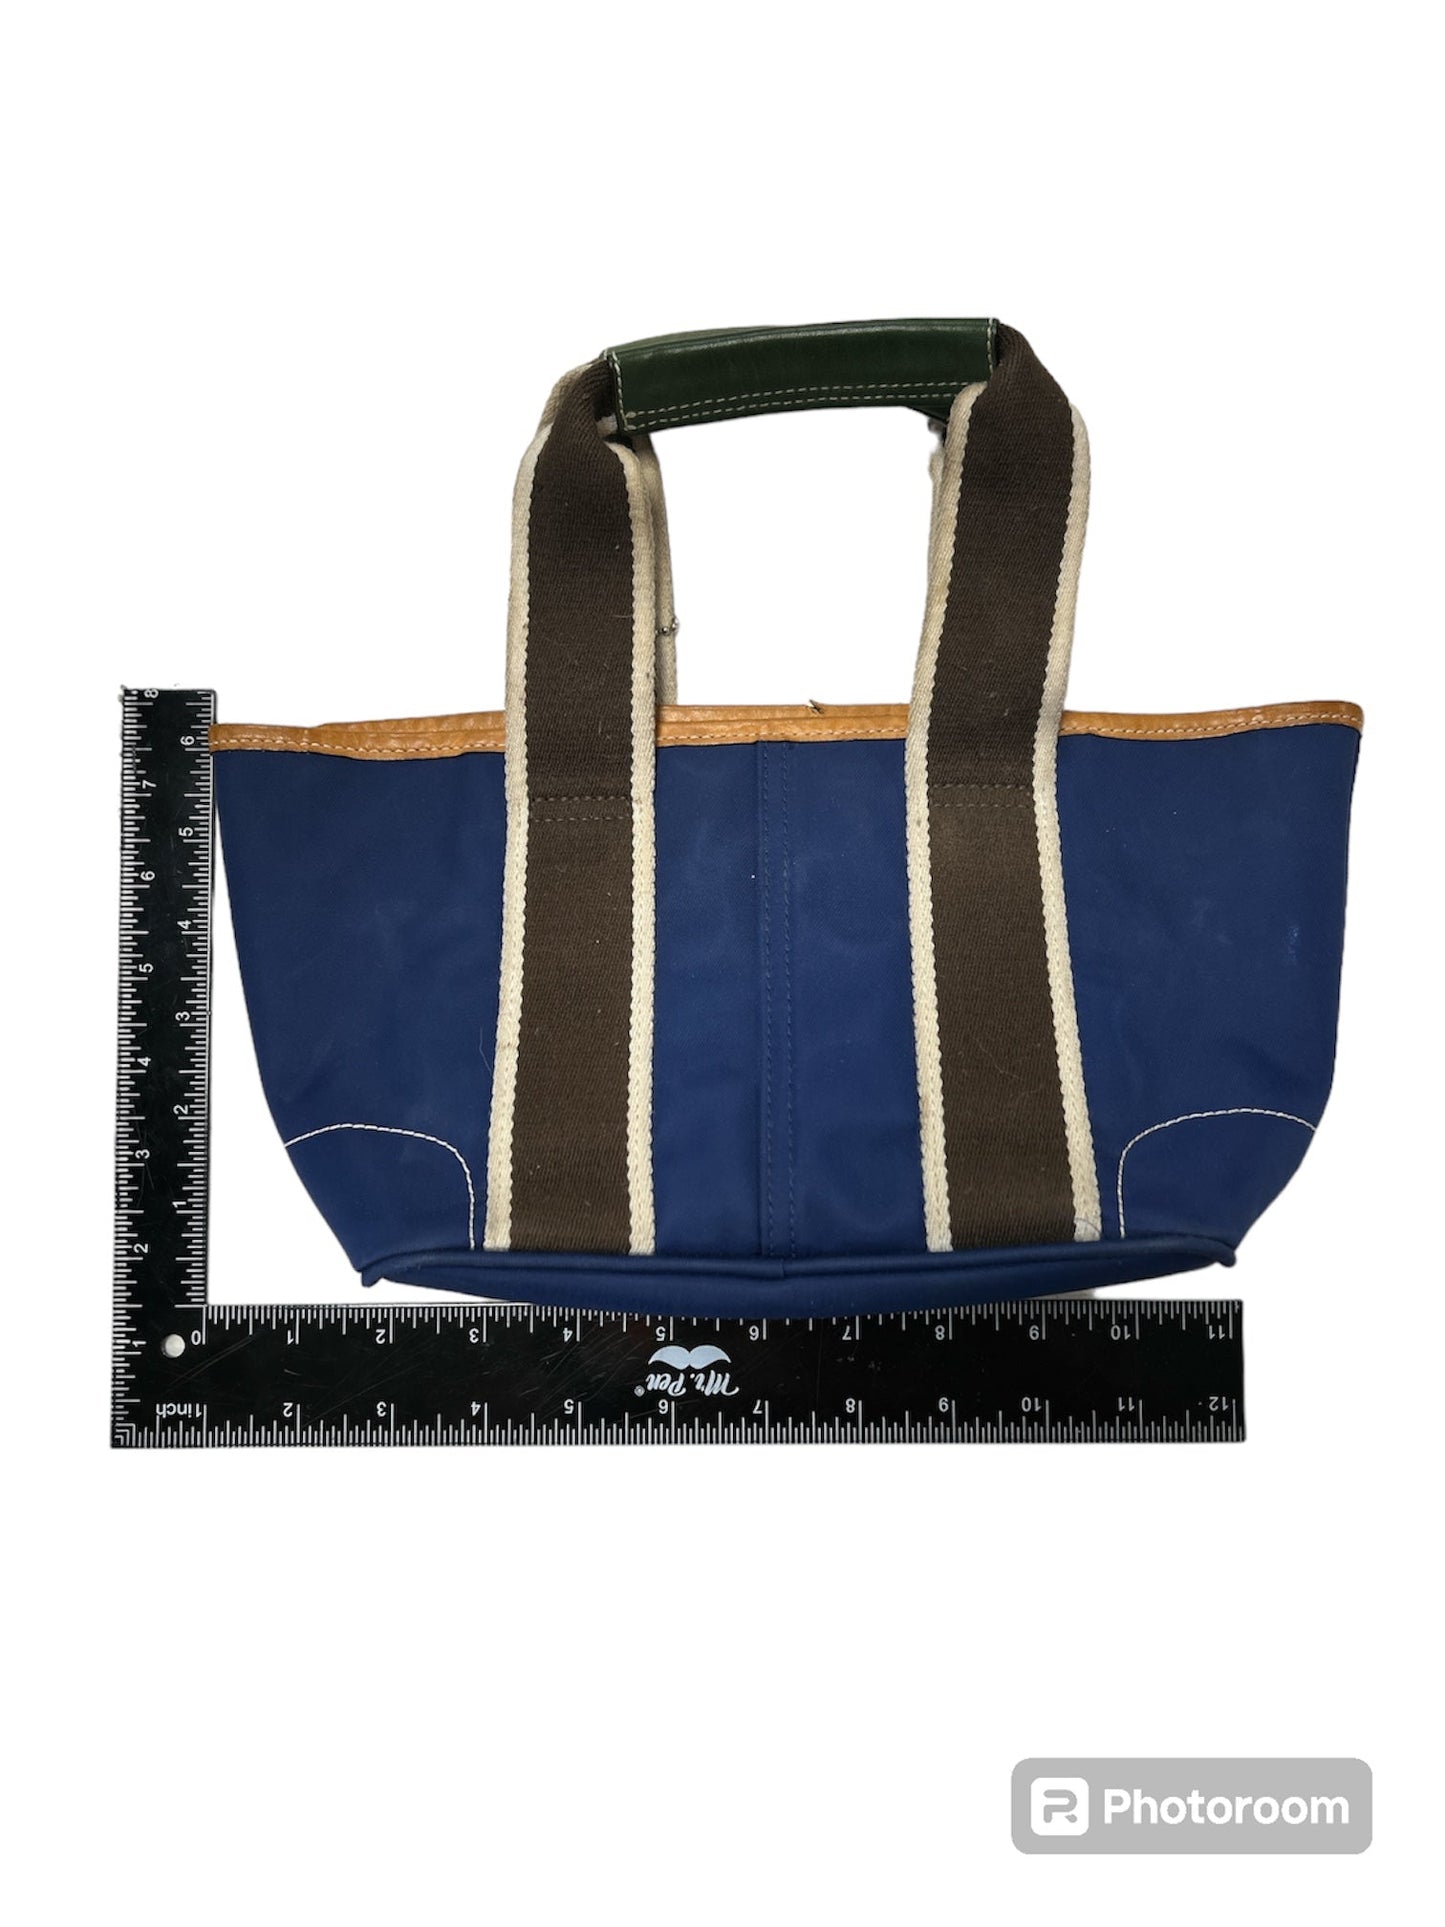 Handbag Designer Coach, Size Small